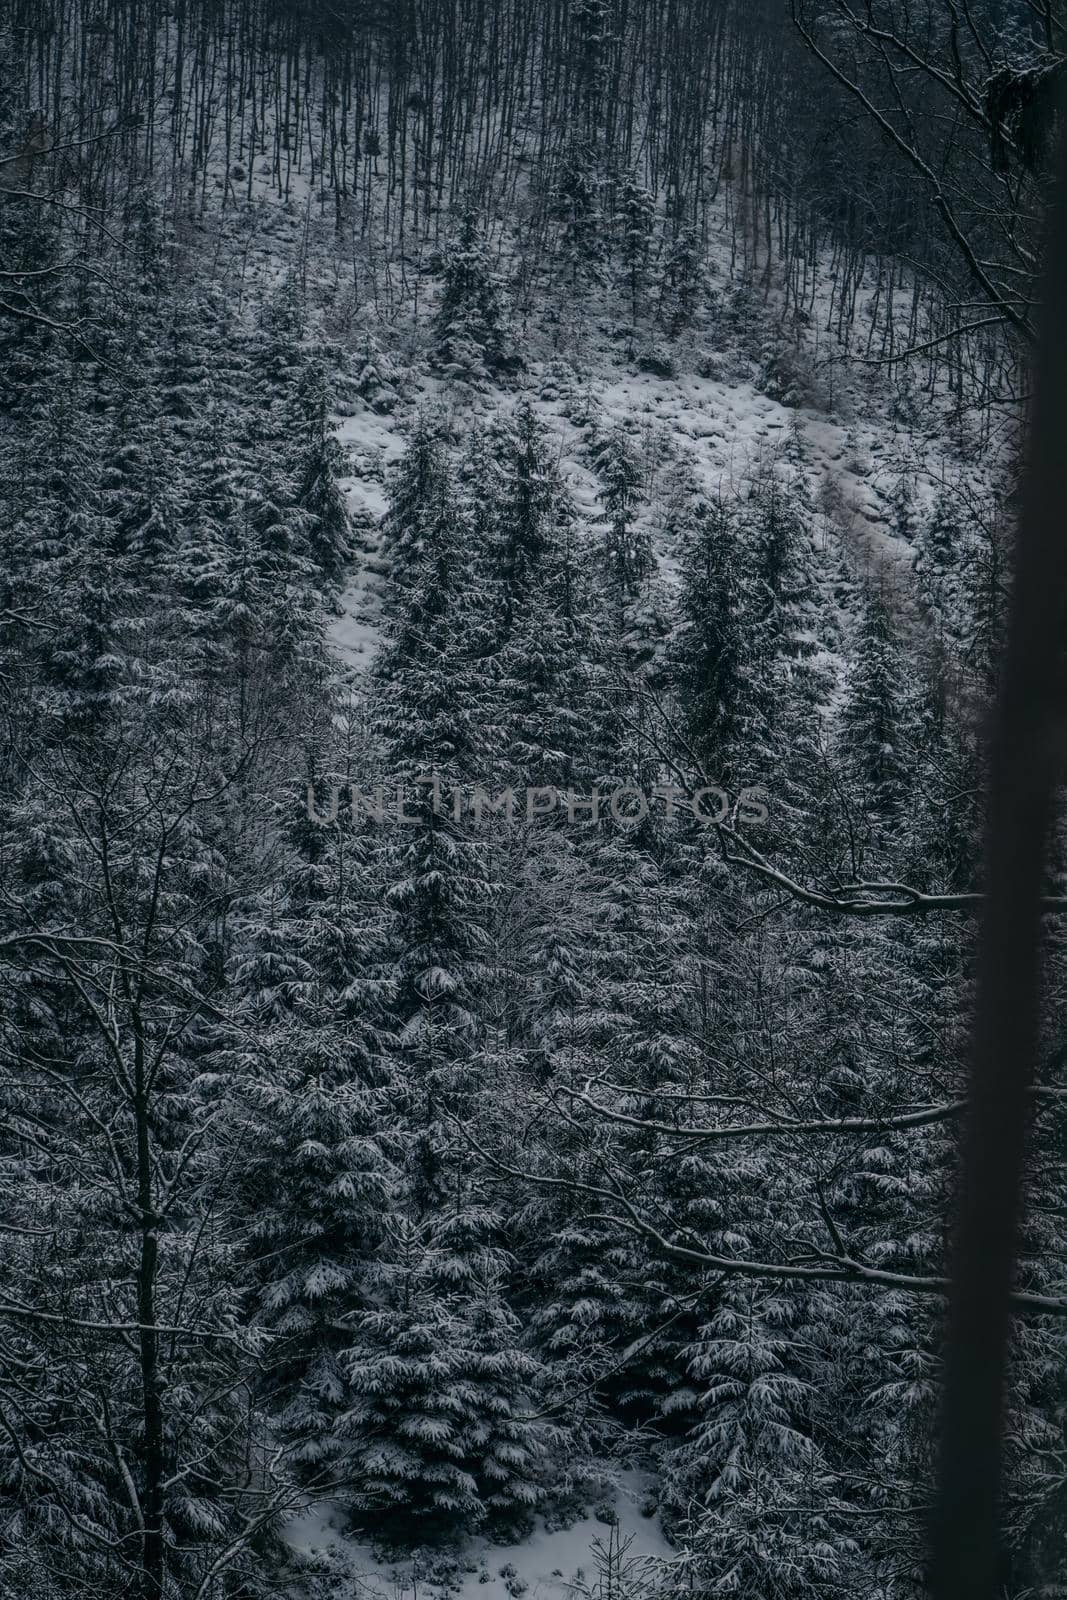 Winter Dark forest with pine trees by Skrobanek